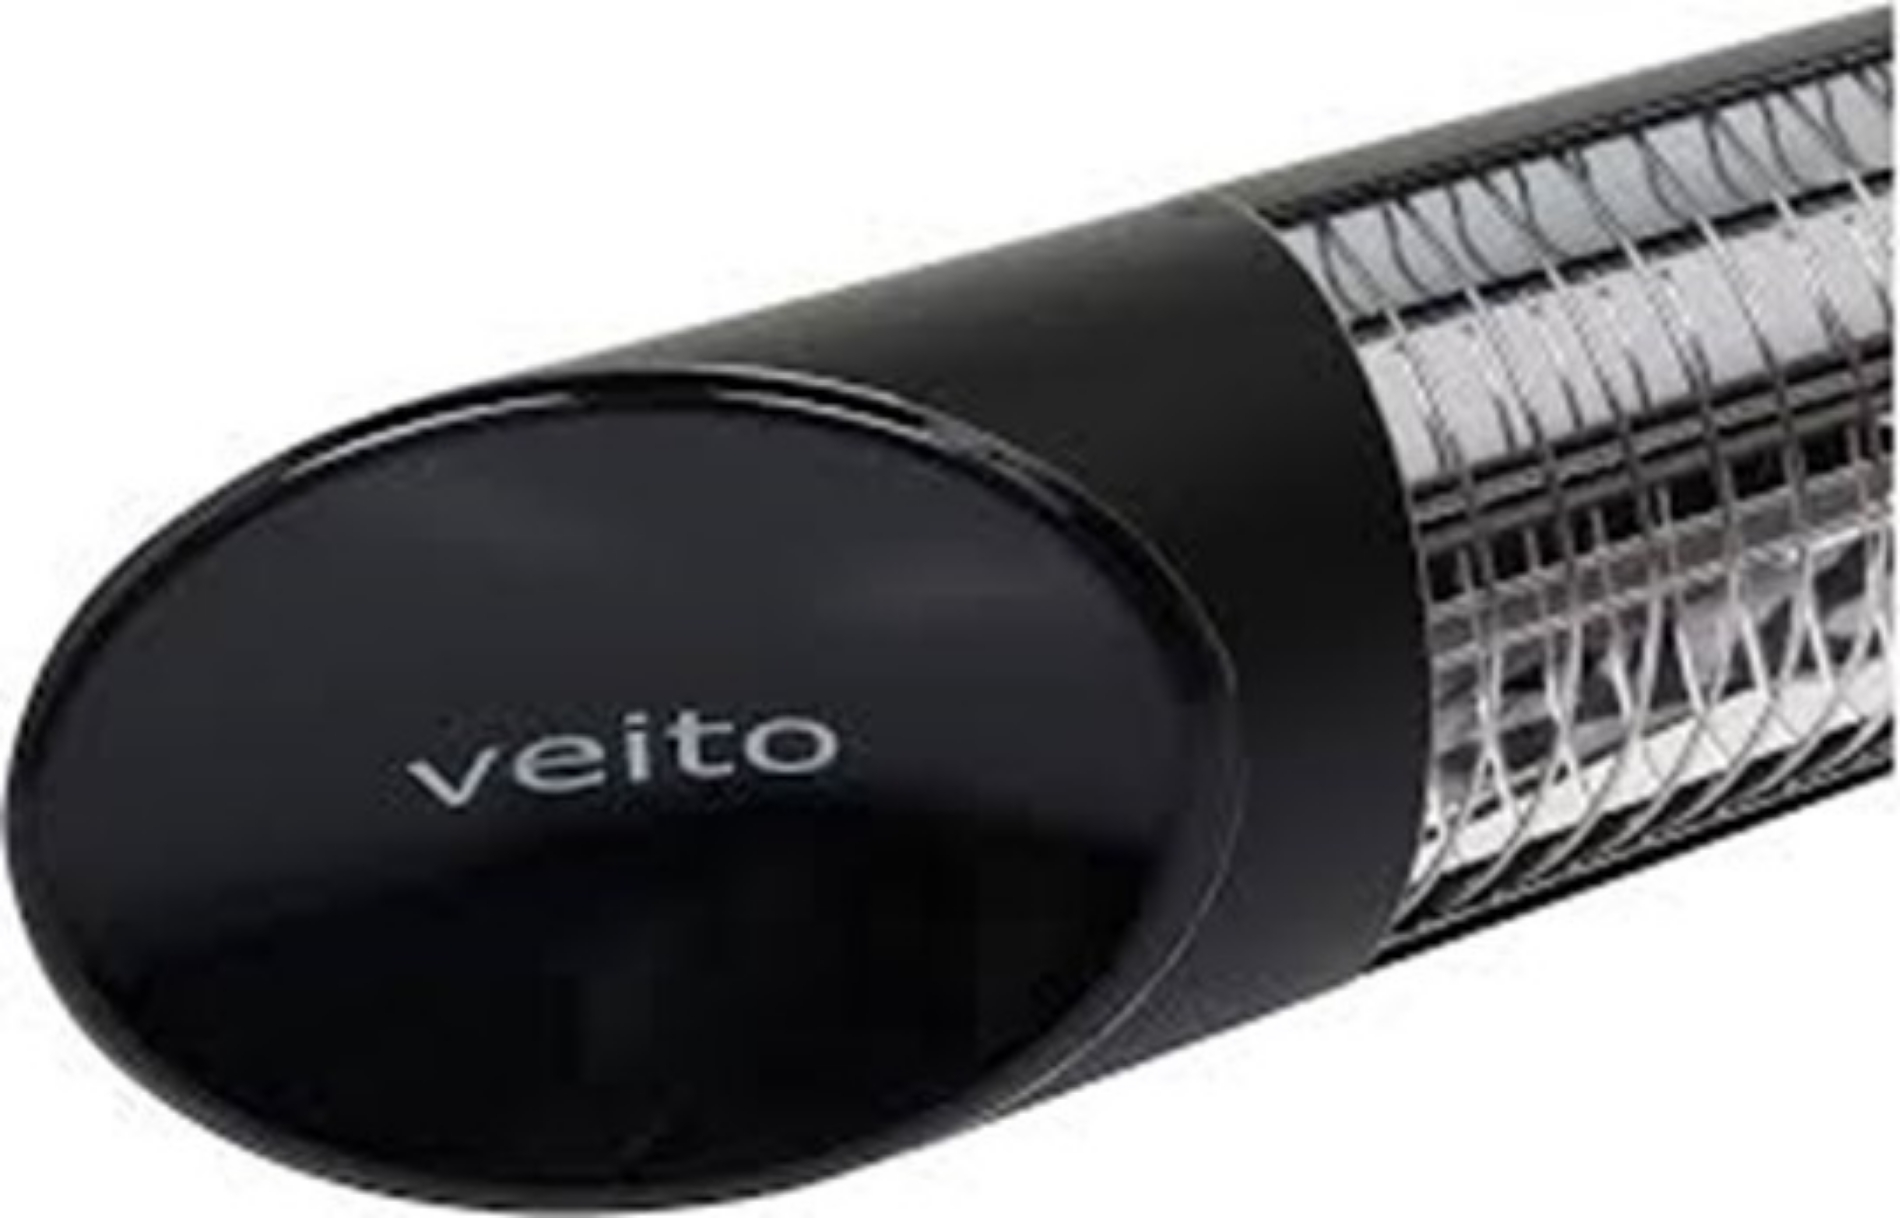 Veito Blade Mini 1.2kW Black Infrared Heater zoom